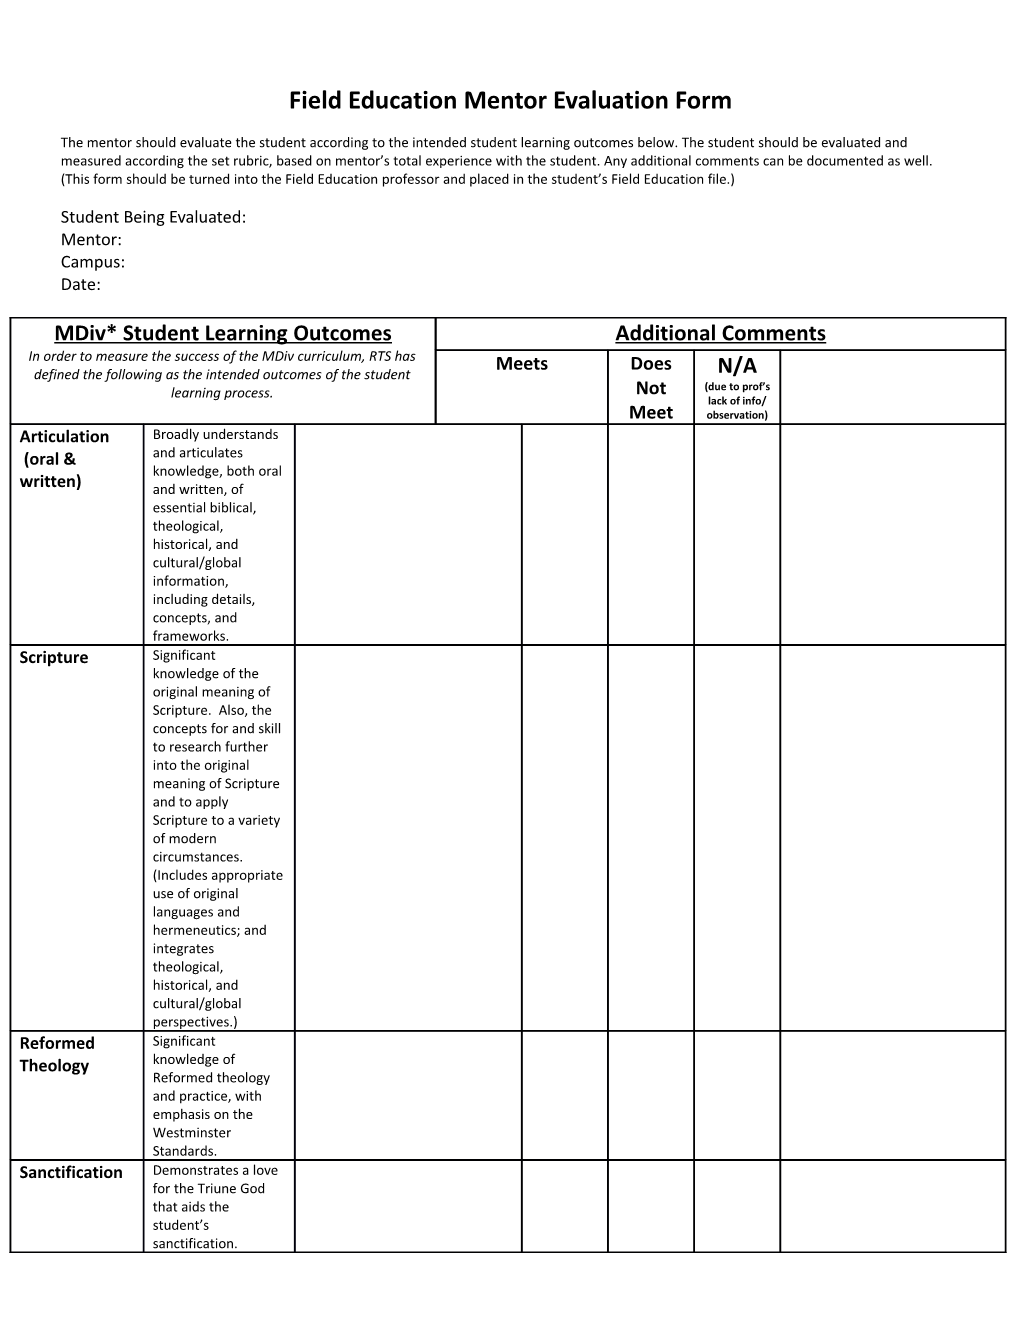 Field Education Mentor Evaluation Form